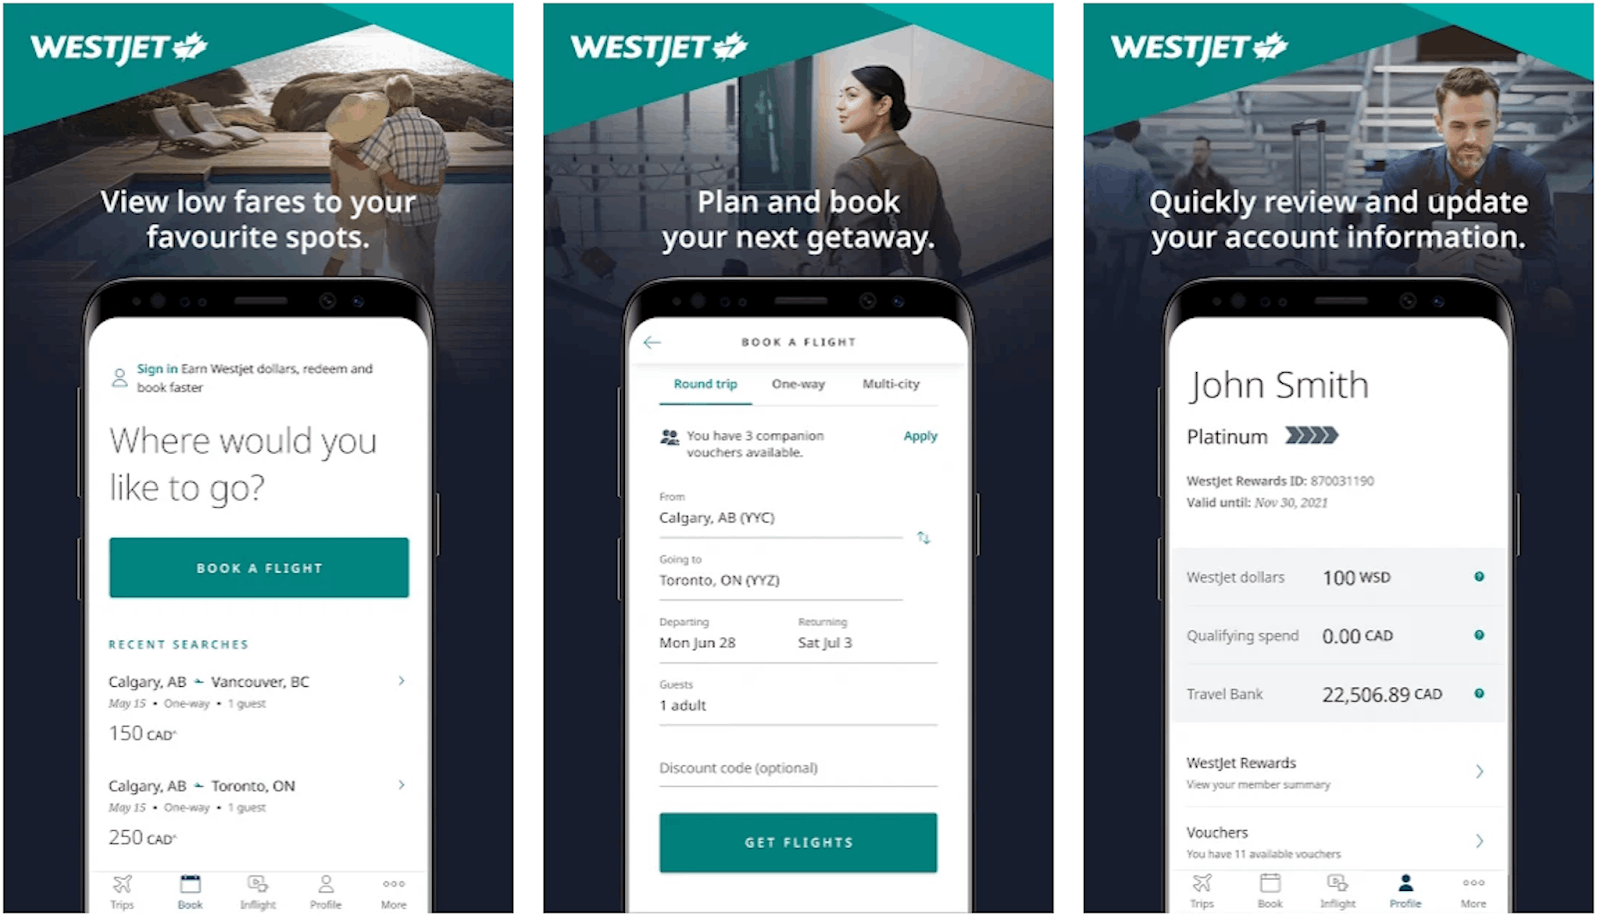 WestJet - Plan a Getaway